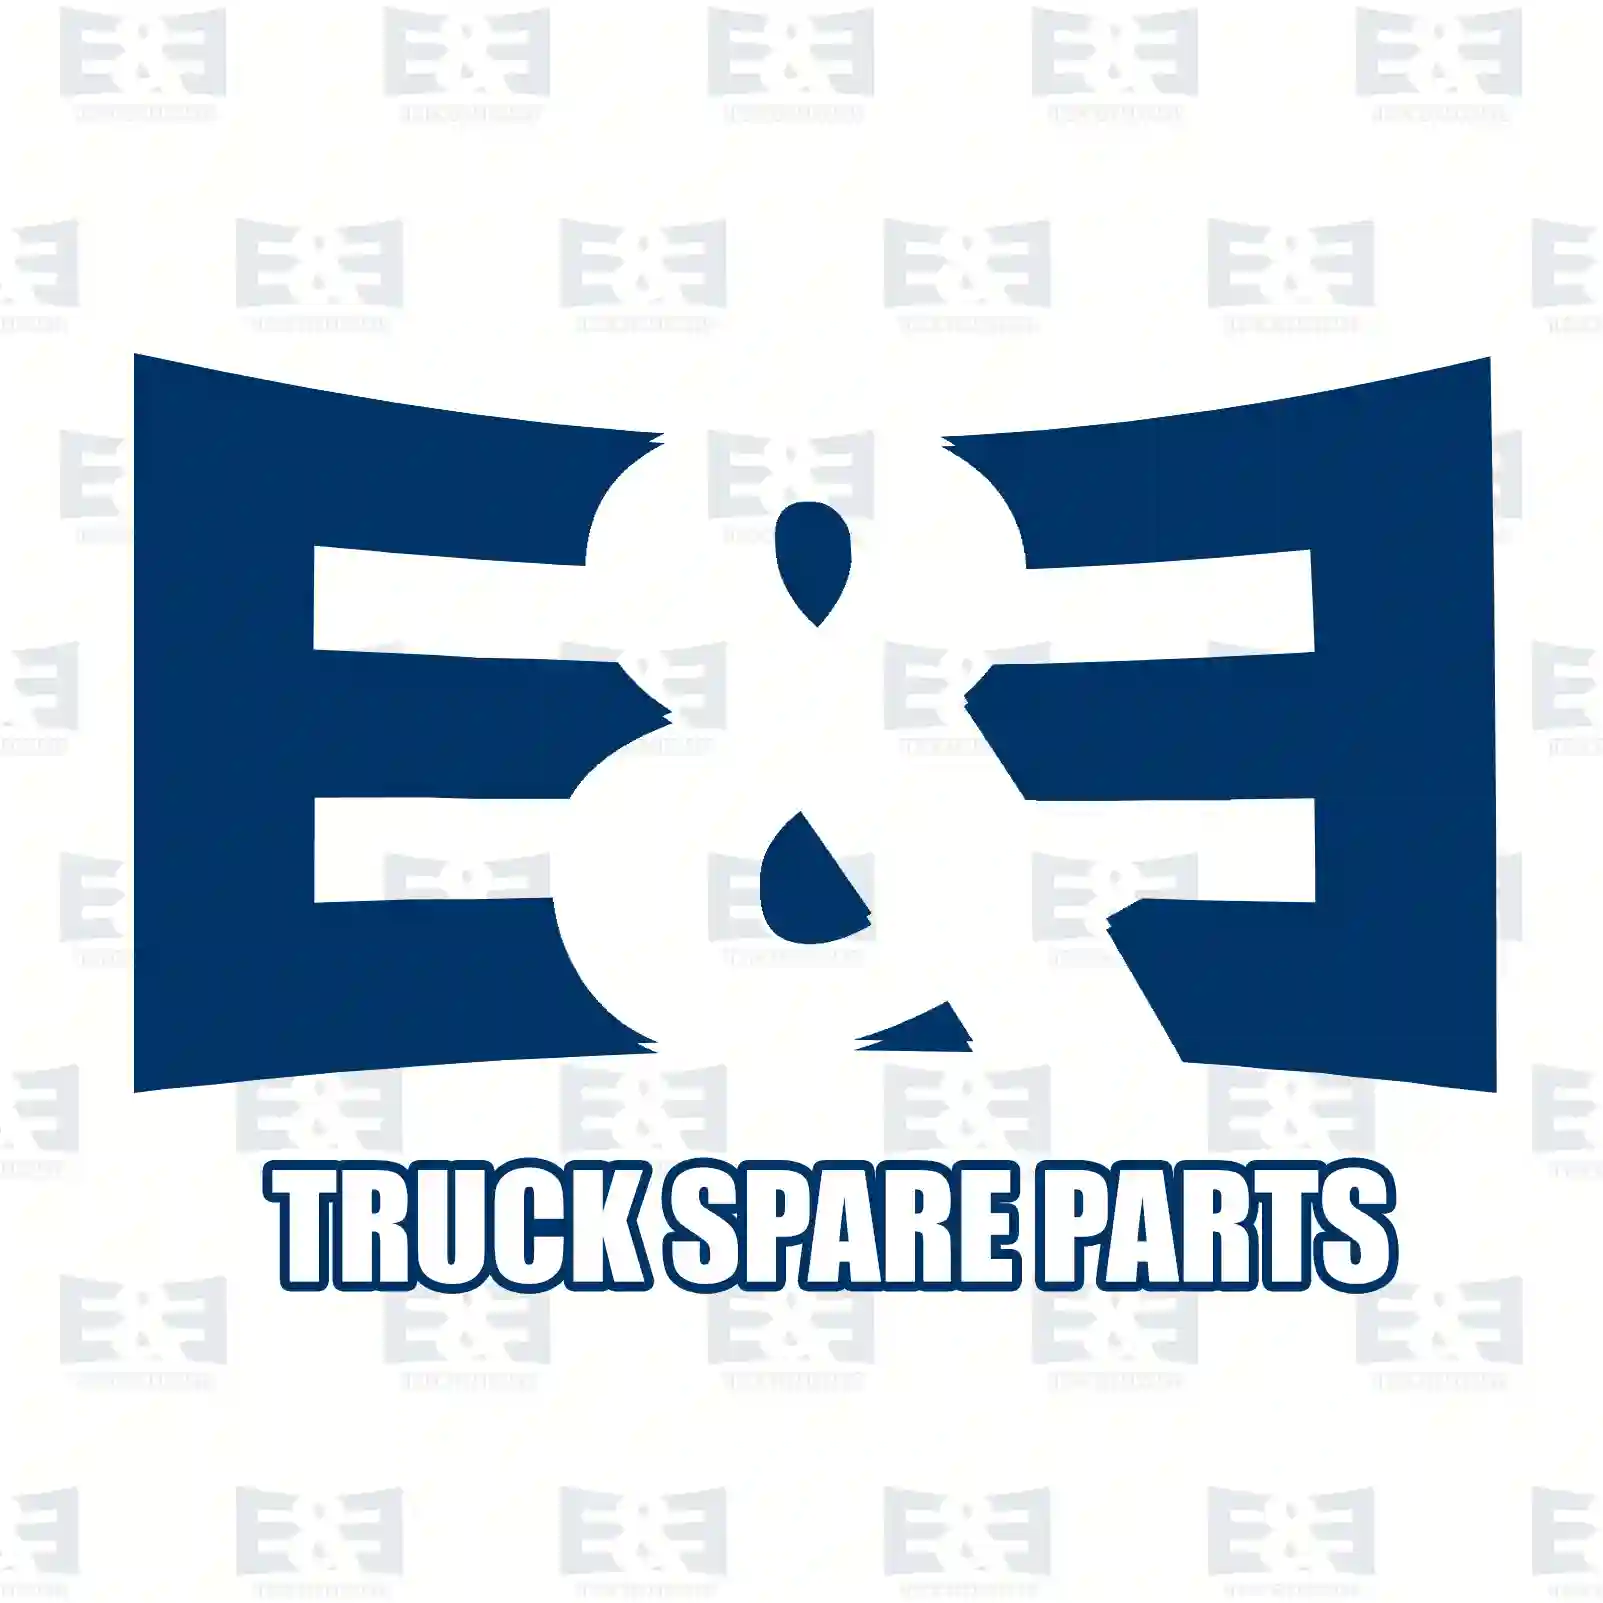 Engine mounting, front, left, 2E2207689, 5010316591, , , , , ||  2E2207689 E&E Truck Spare Parts | Truck Spare Parts, Auotomotive Spare Parts Engine mounting, front, left, 2E2207689, 5010316591, , , , , ||  2E2207689 E&E Truck Spare Parts | Truck Spare Parts, Auotomotive Spare Parts